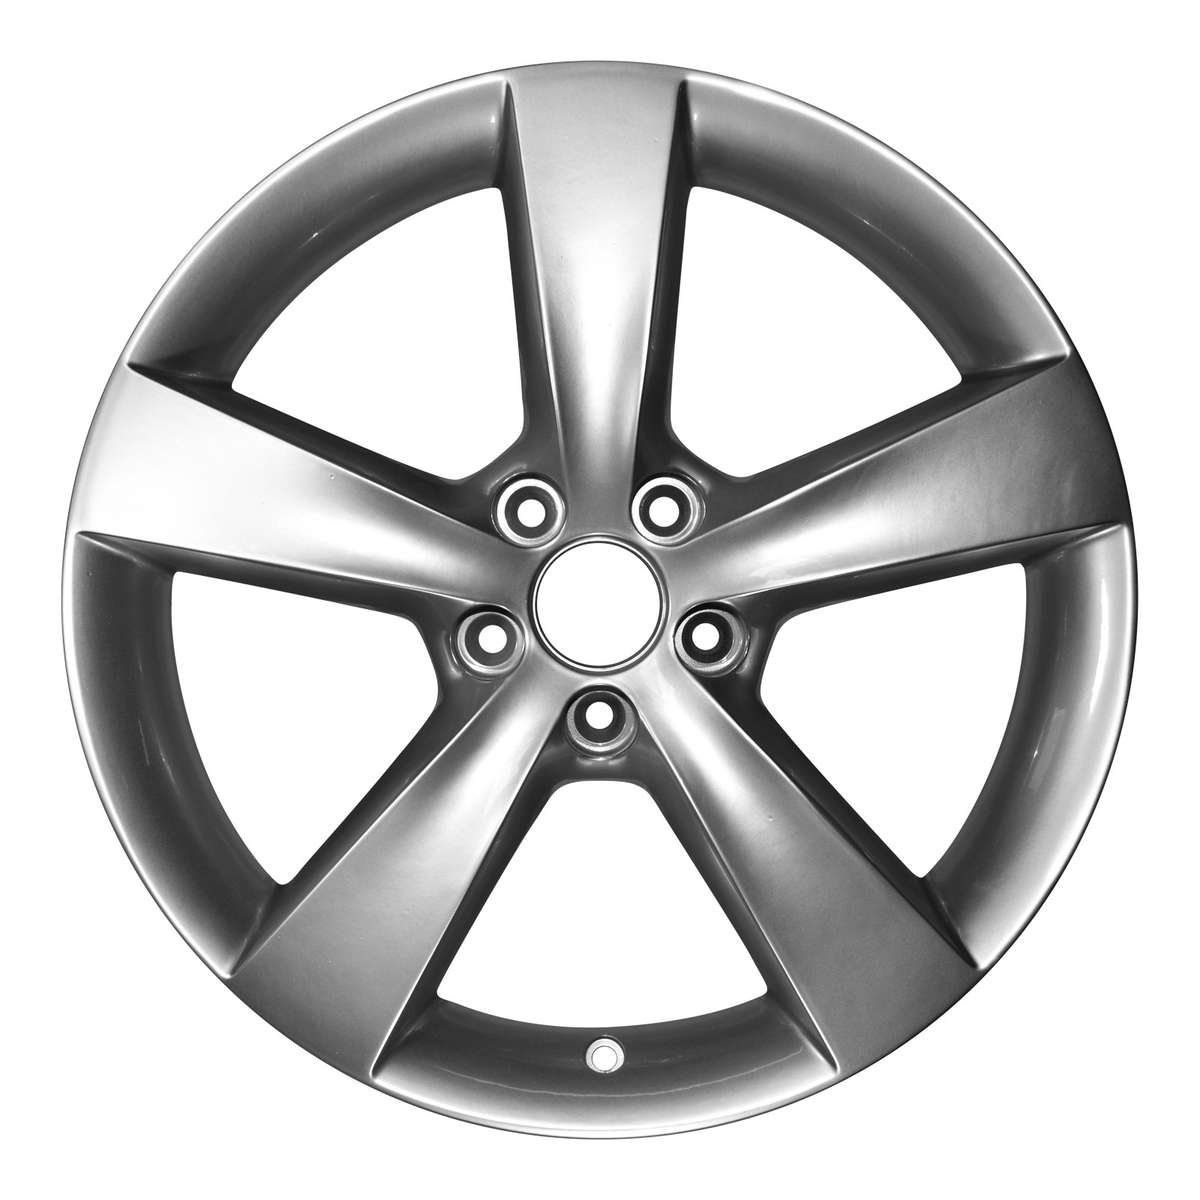 2015 Dodge Dart New 18" Replacement Wheel Rim RW2479H